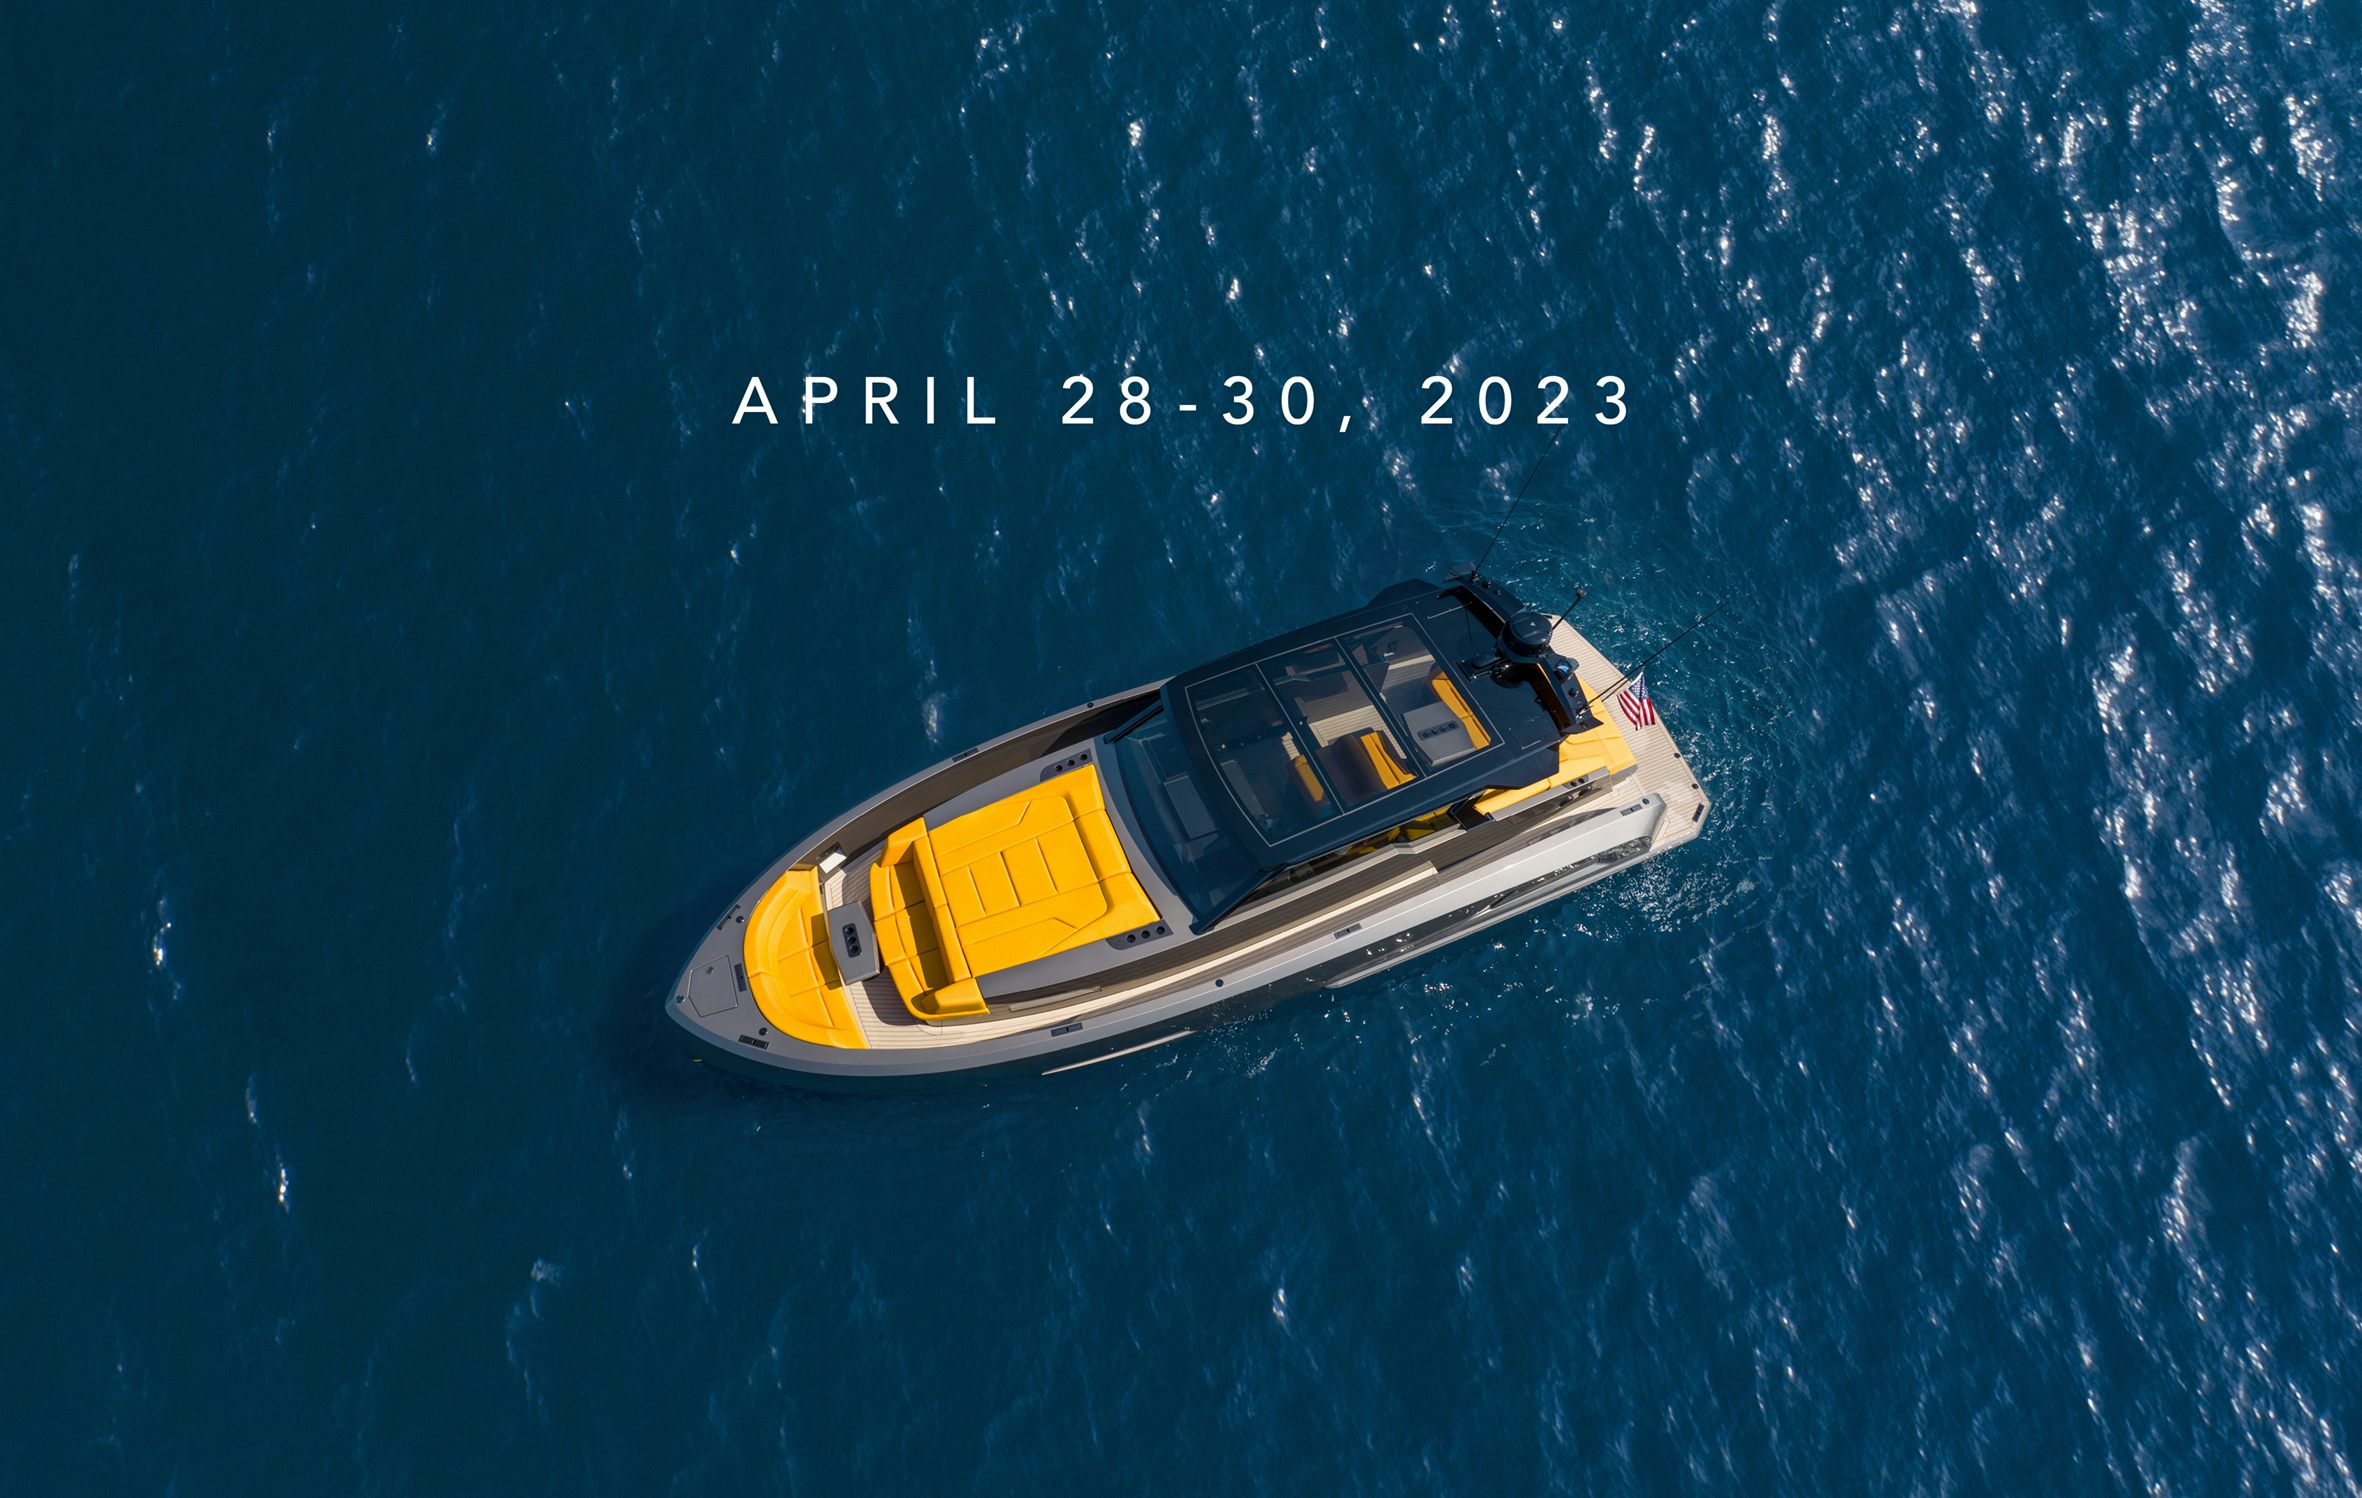 Catawba Island Boat Show 2023